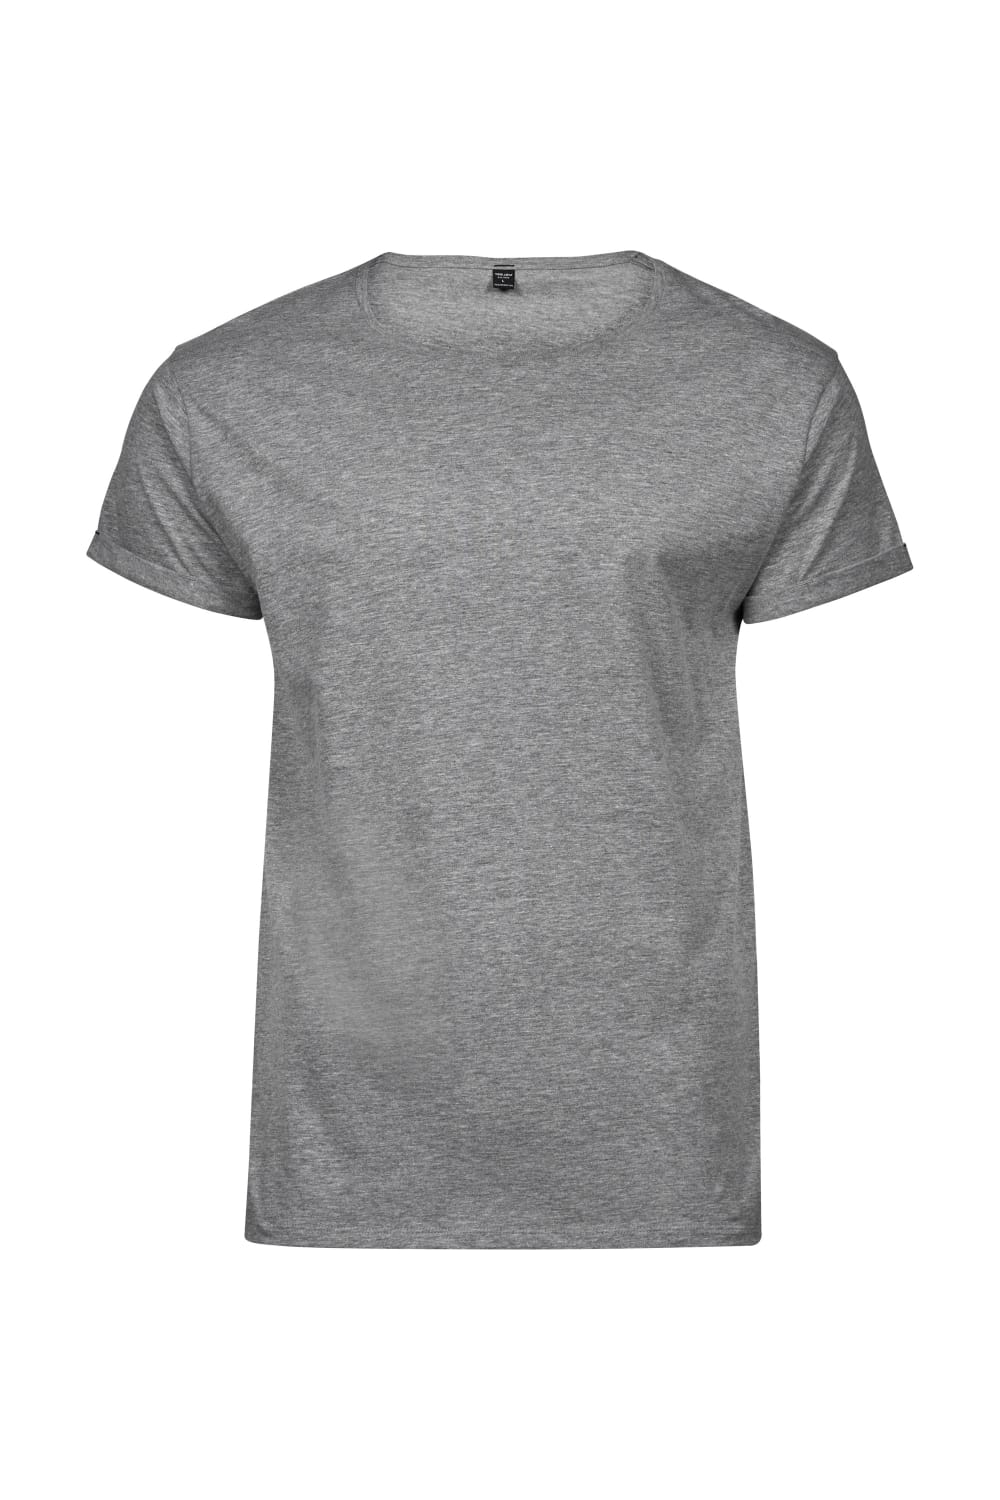 Tee Jays Mens Roll-Up T-Shirt (Heather Gray)